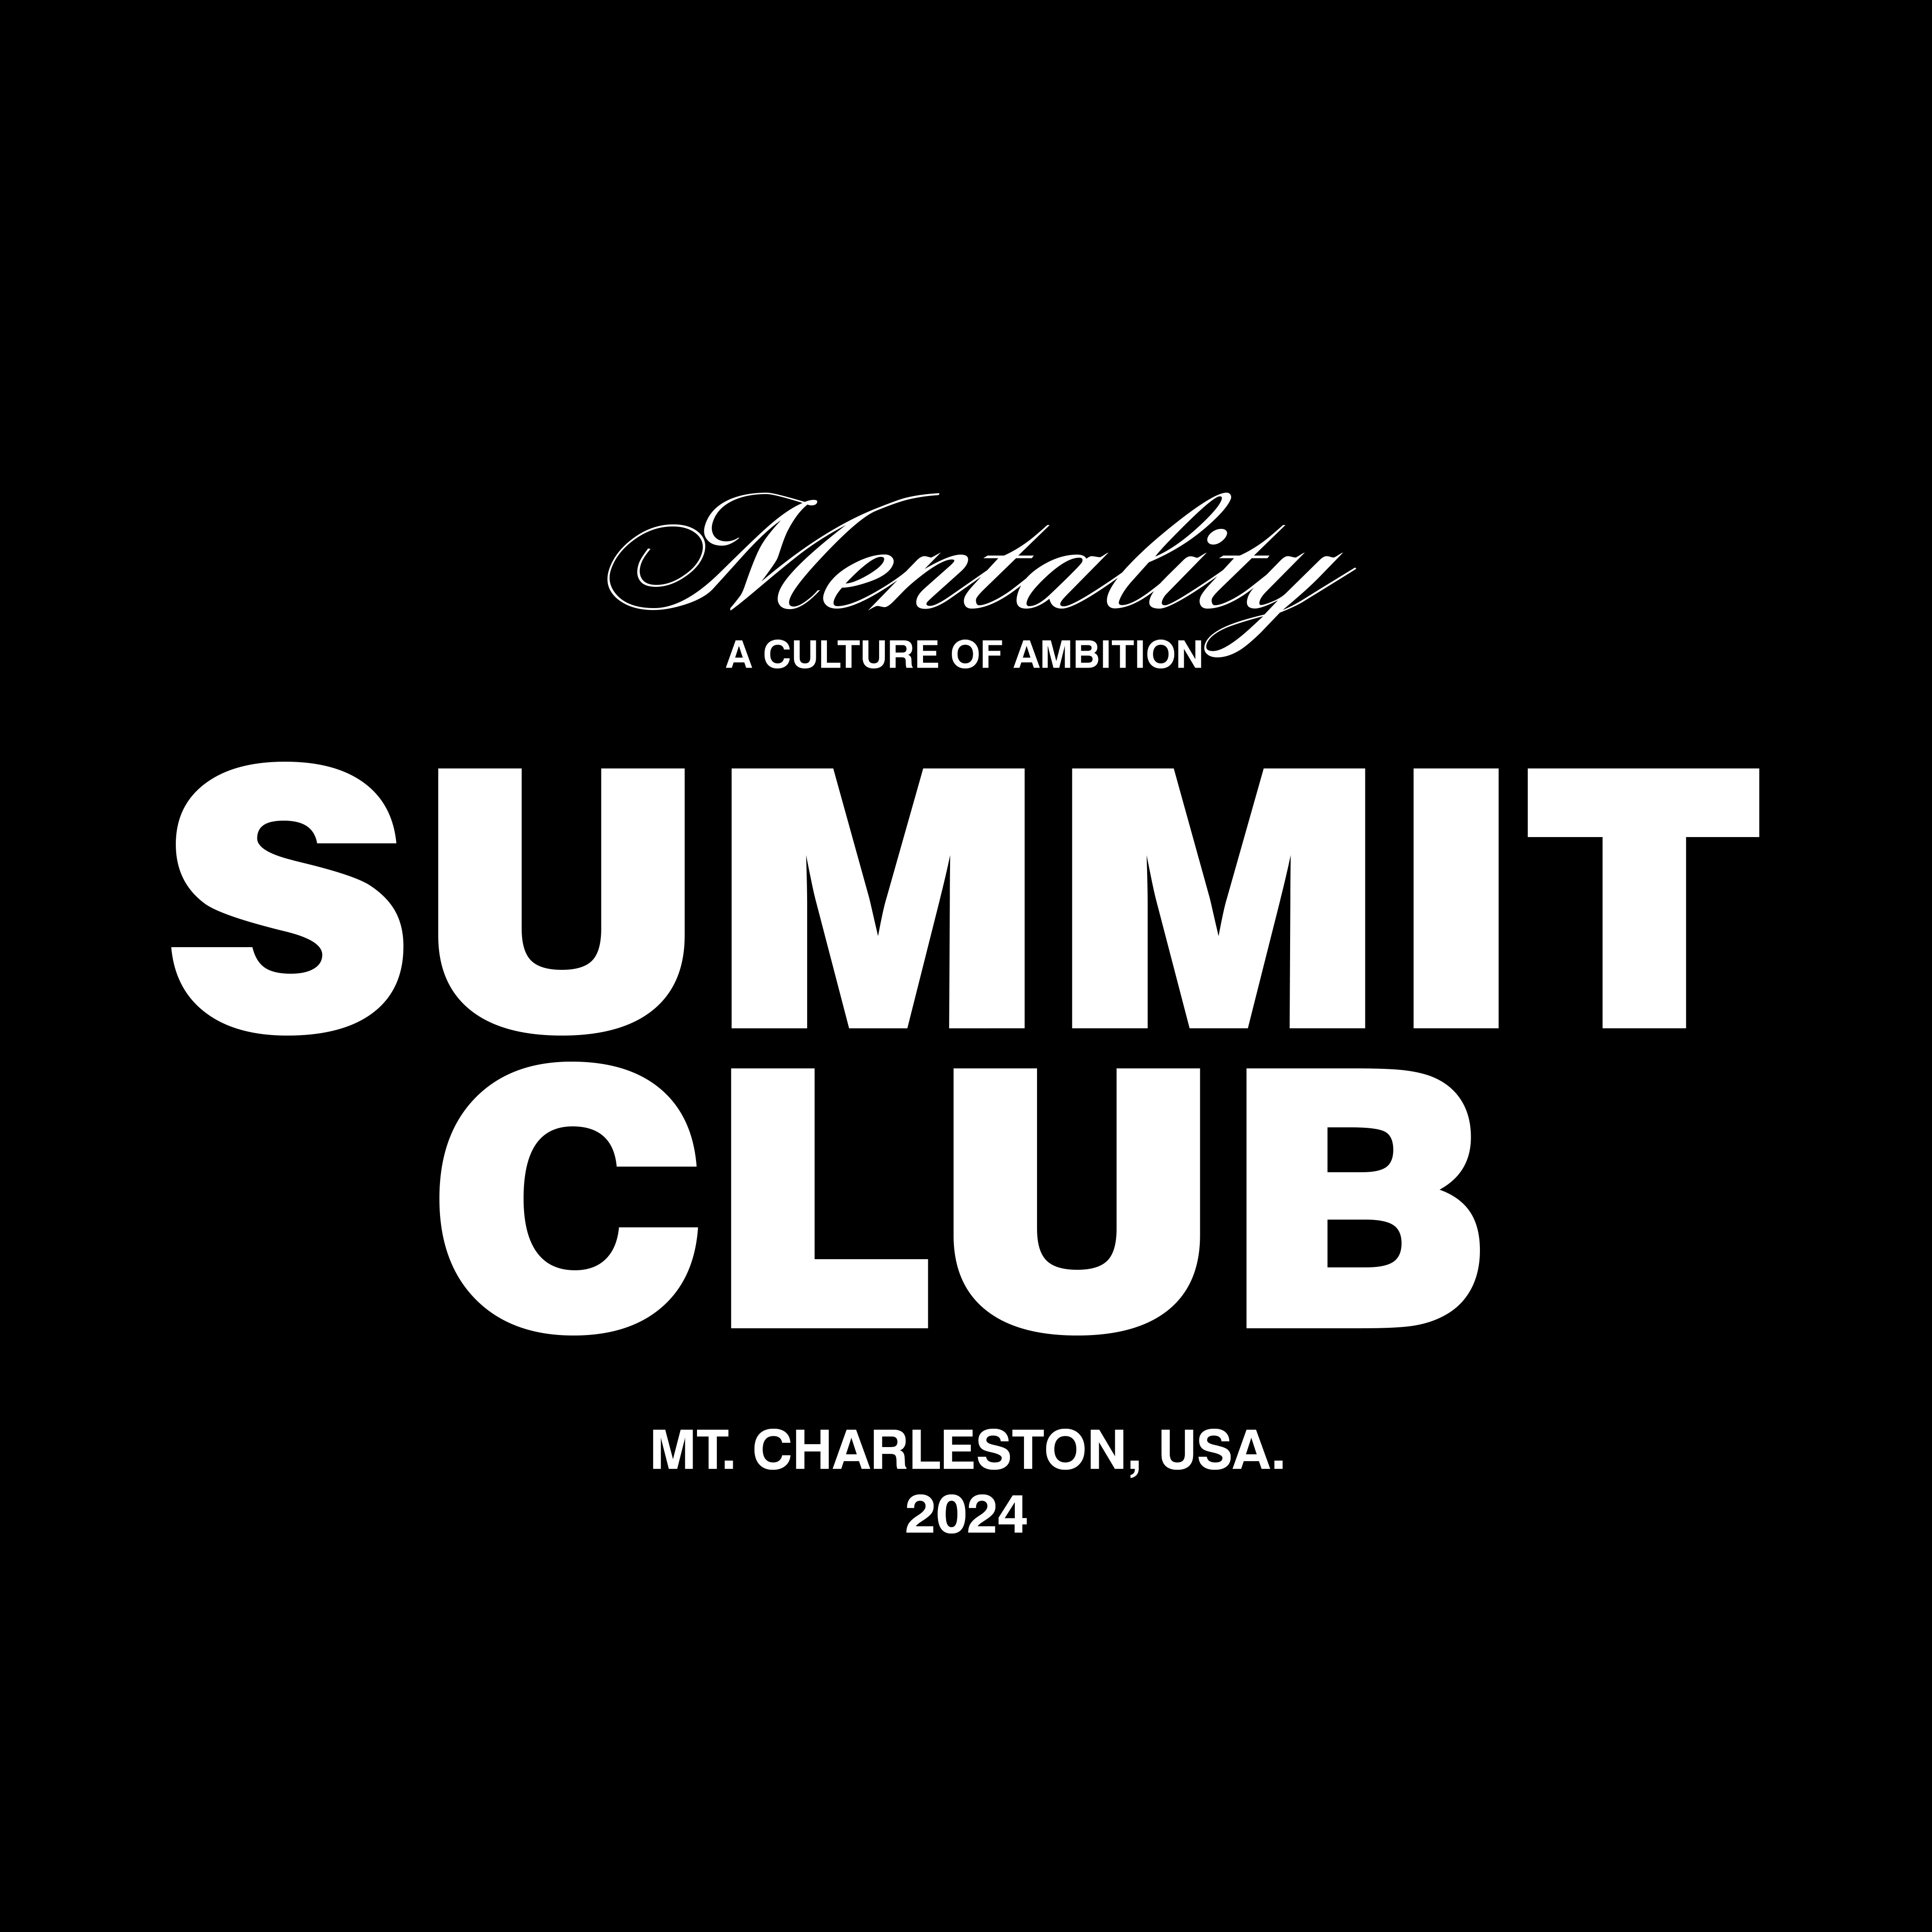 'Summit Club' Wordmark Tee